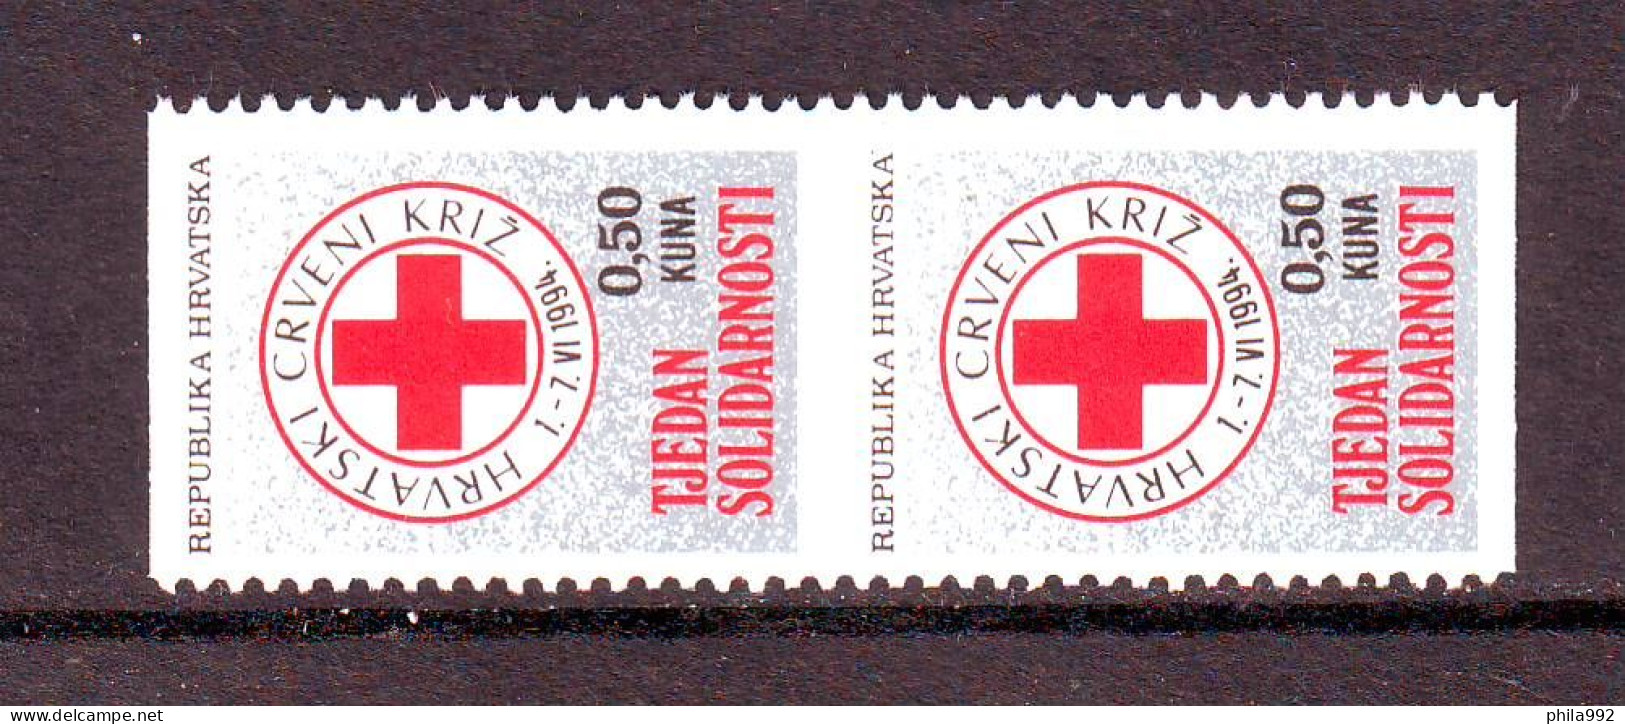 Croatia 1994 Charity Stamp Mi.No.34 RED CROSS Solidarity A Pair Without Horizontal Serrations MNH - Croatia